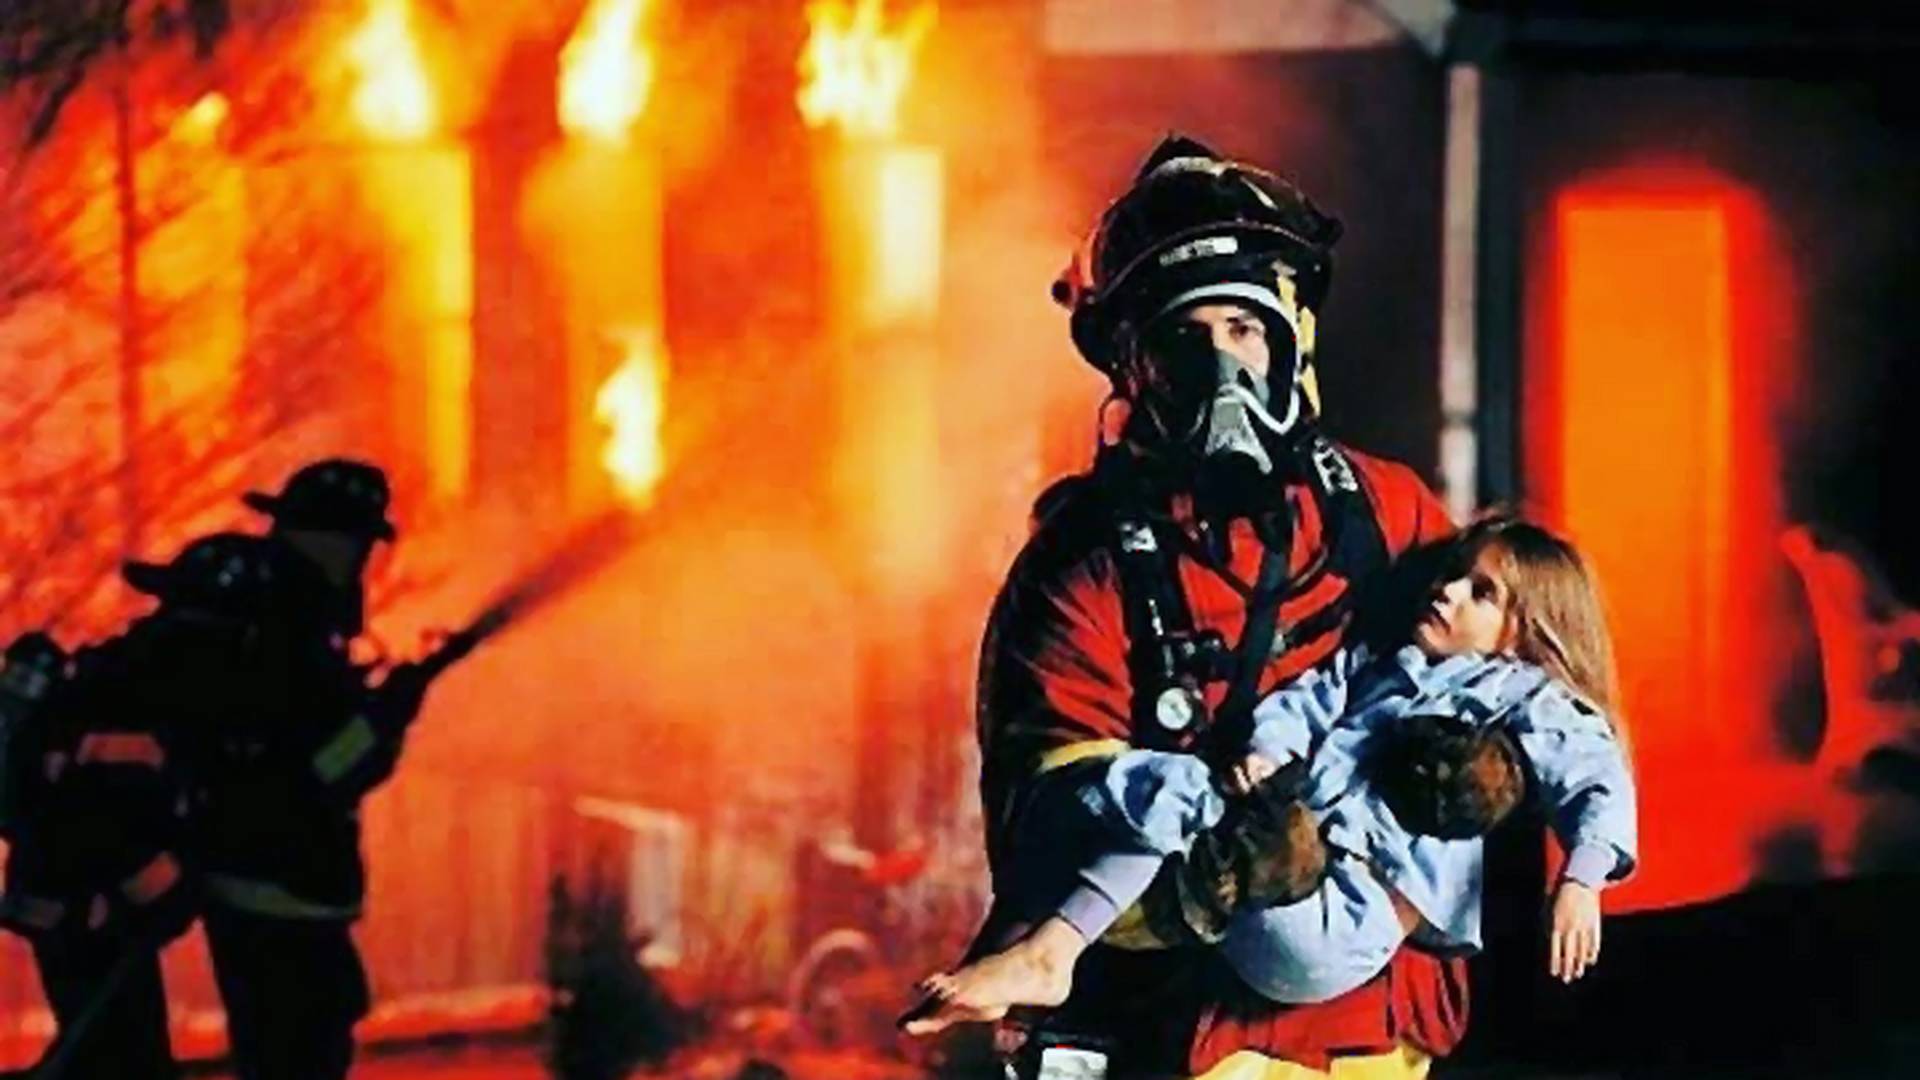 Vatrogasac u srcu: Milan je ceo život posvetio pomaganju drugima